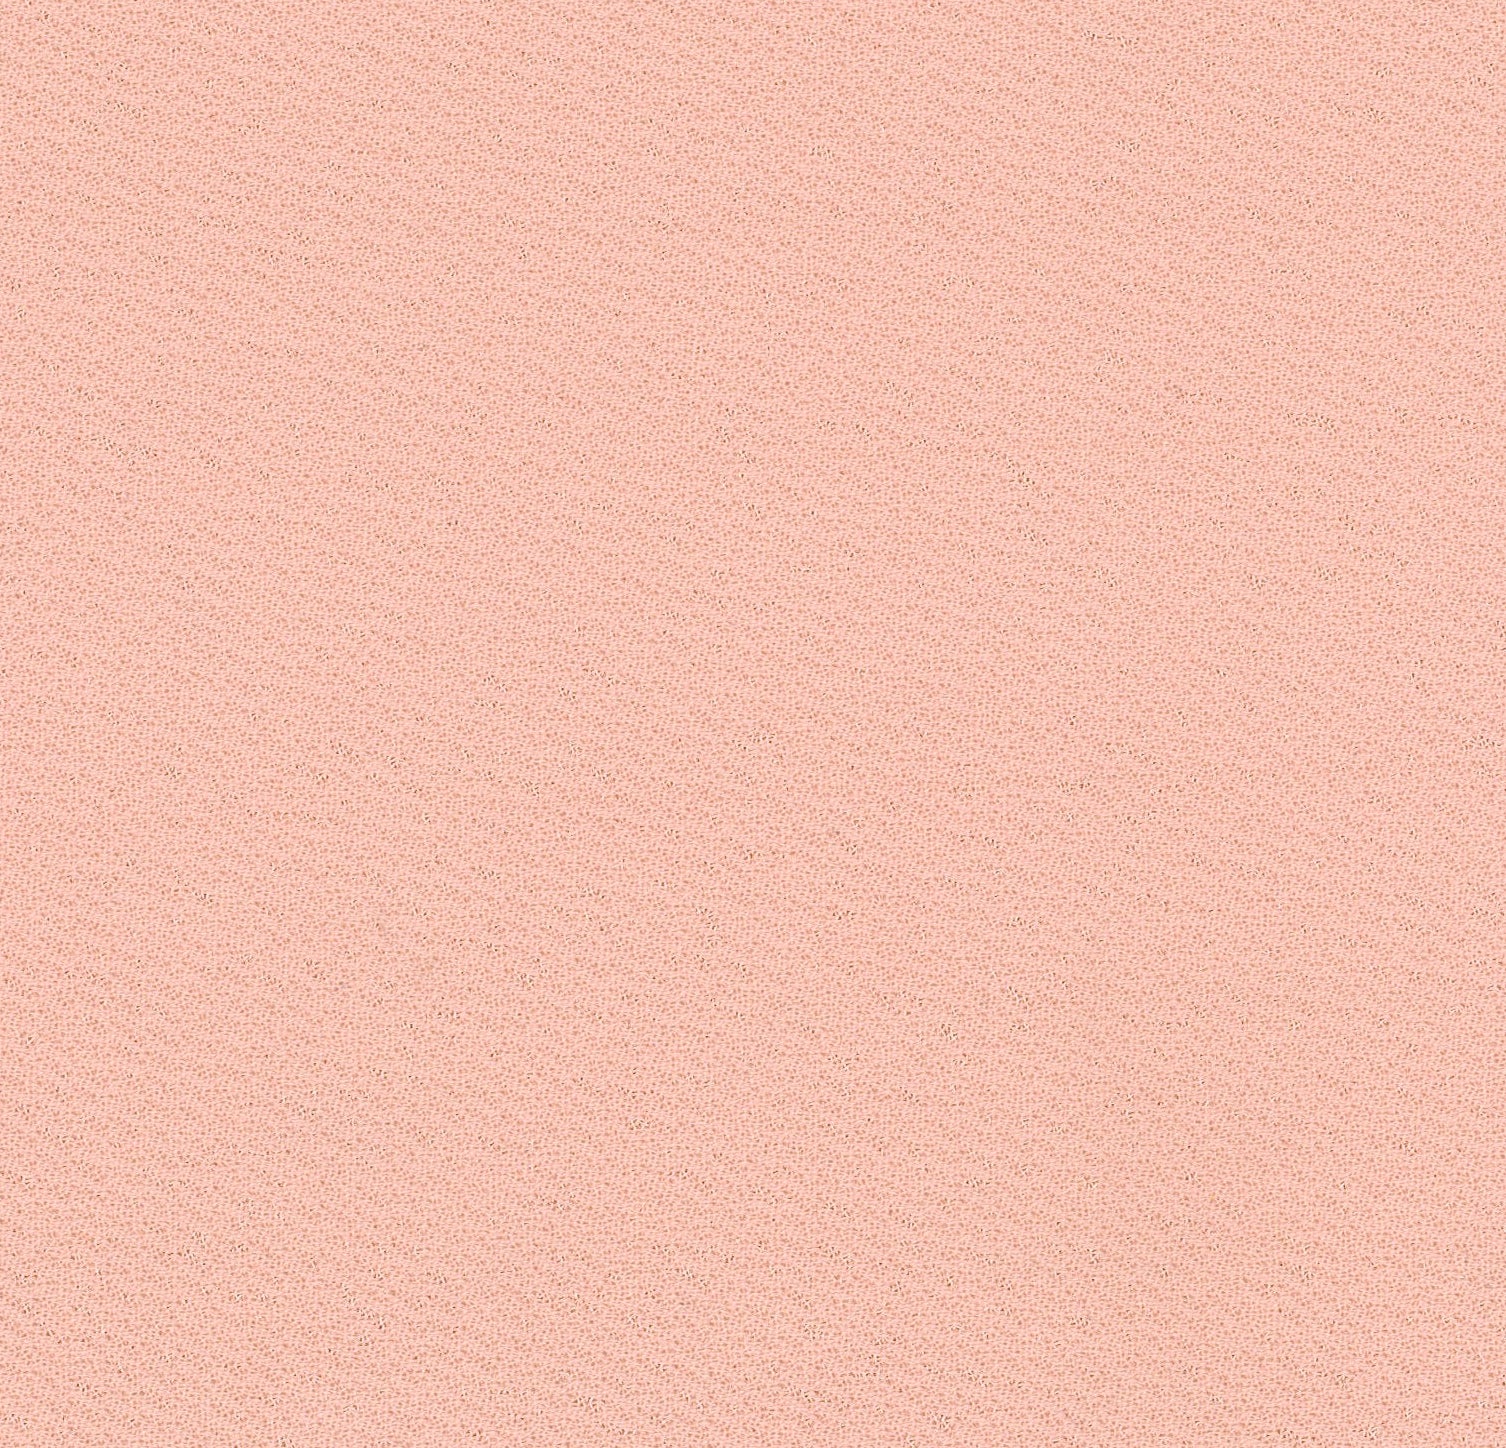 35005-11 Powder Pink Polyester Plain Dyed 280g/yd 54&quot; pink plain dyed polyester woven Solid Color - knit fabric - woven fabric - fabric company - fabric wholesale - fabric b2b - fabric factory - high quality fabric - hong kong fabric - fabric hk - acetate fabric - cotton fabric - linen fabric - metallic fabric - nylon fabric - polyester fabric - spandex fabric - chun wing hing - cwh hk - fabric worldwide ship - 針織布 - 梳織布 - 布料公司- 布料批發 - 香港布料 - 秦榮興